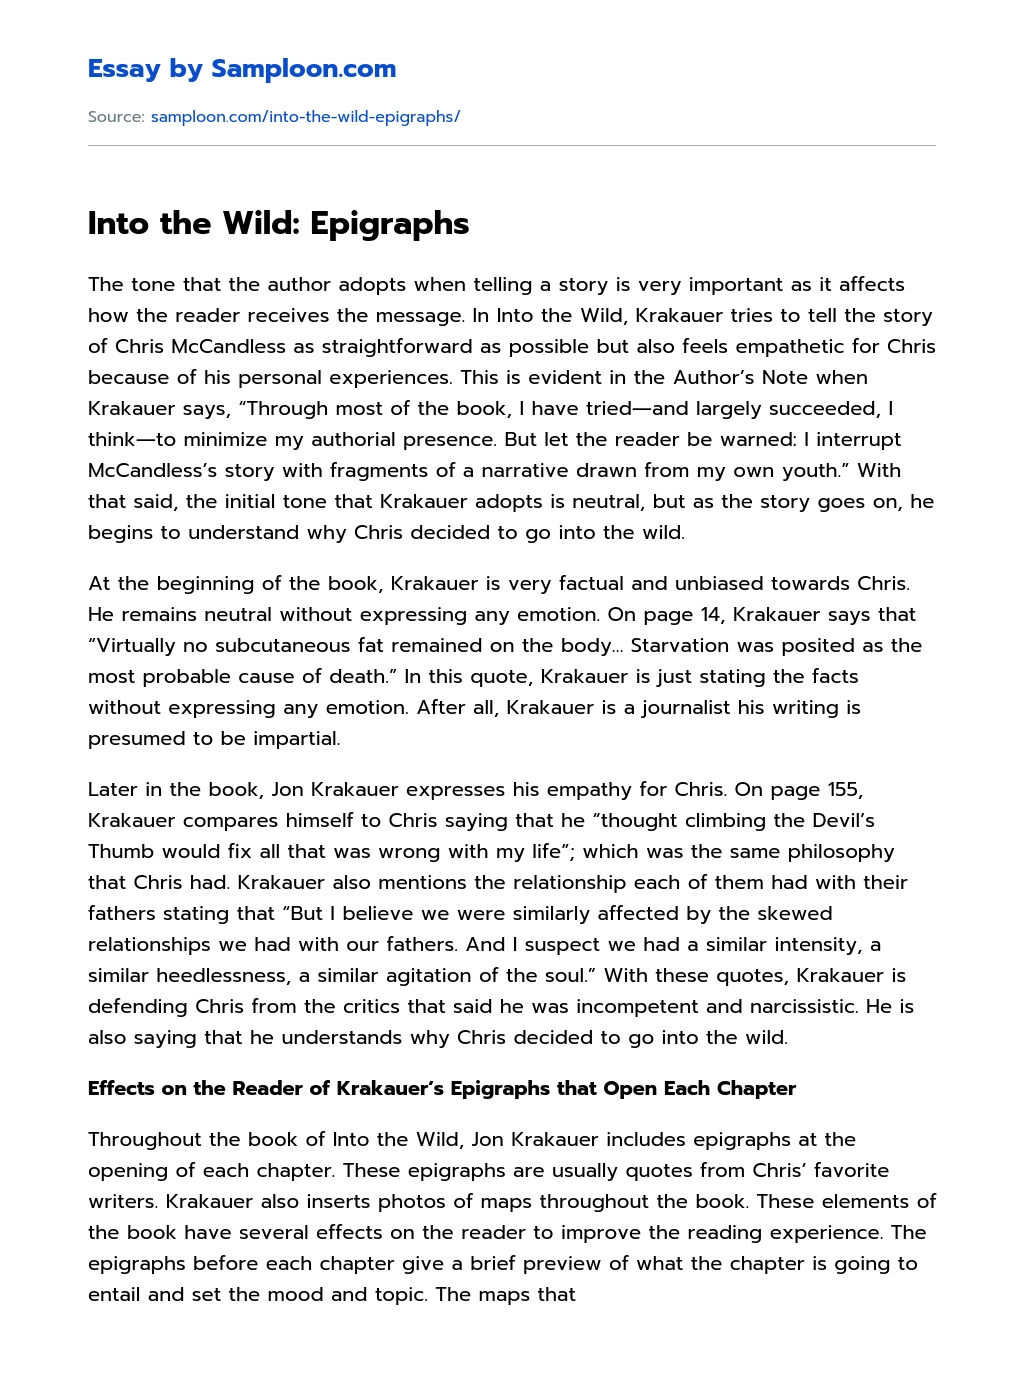 Into the Wild: Epigraphs Analytical Essay essay